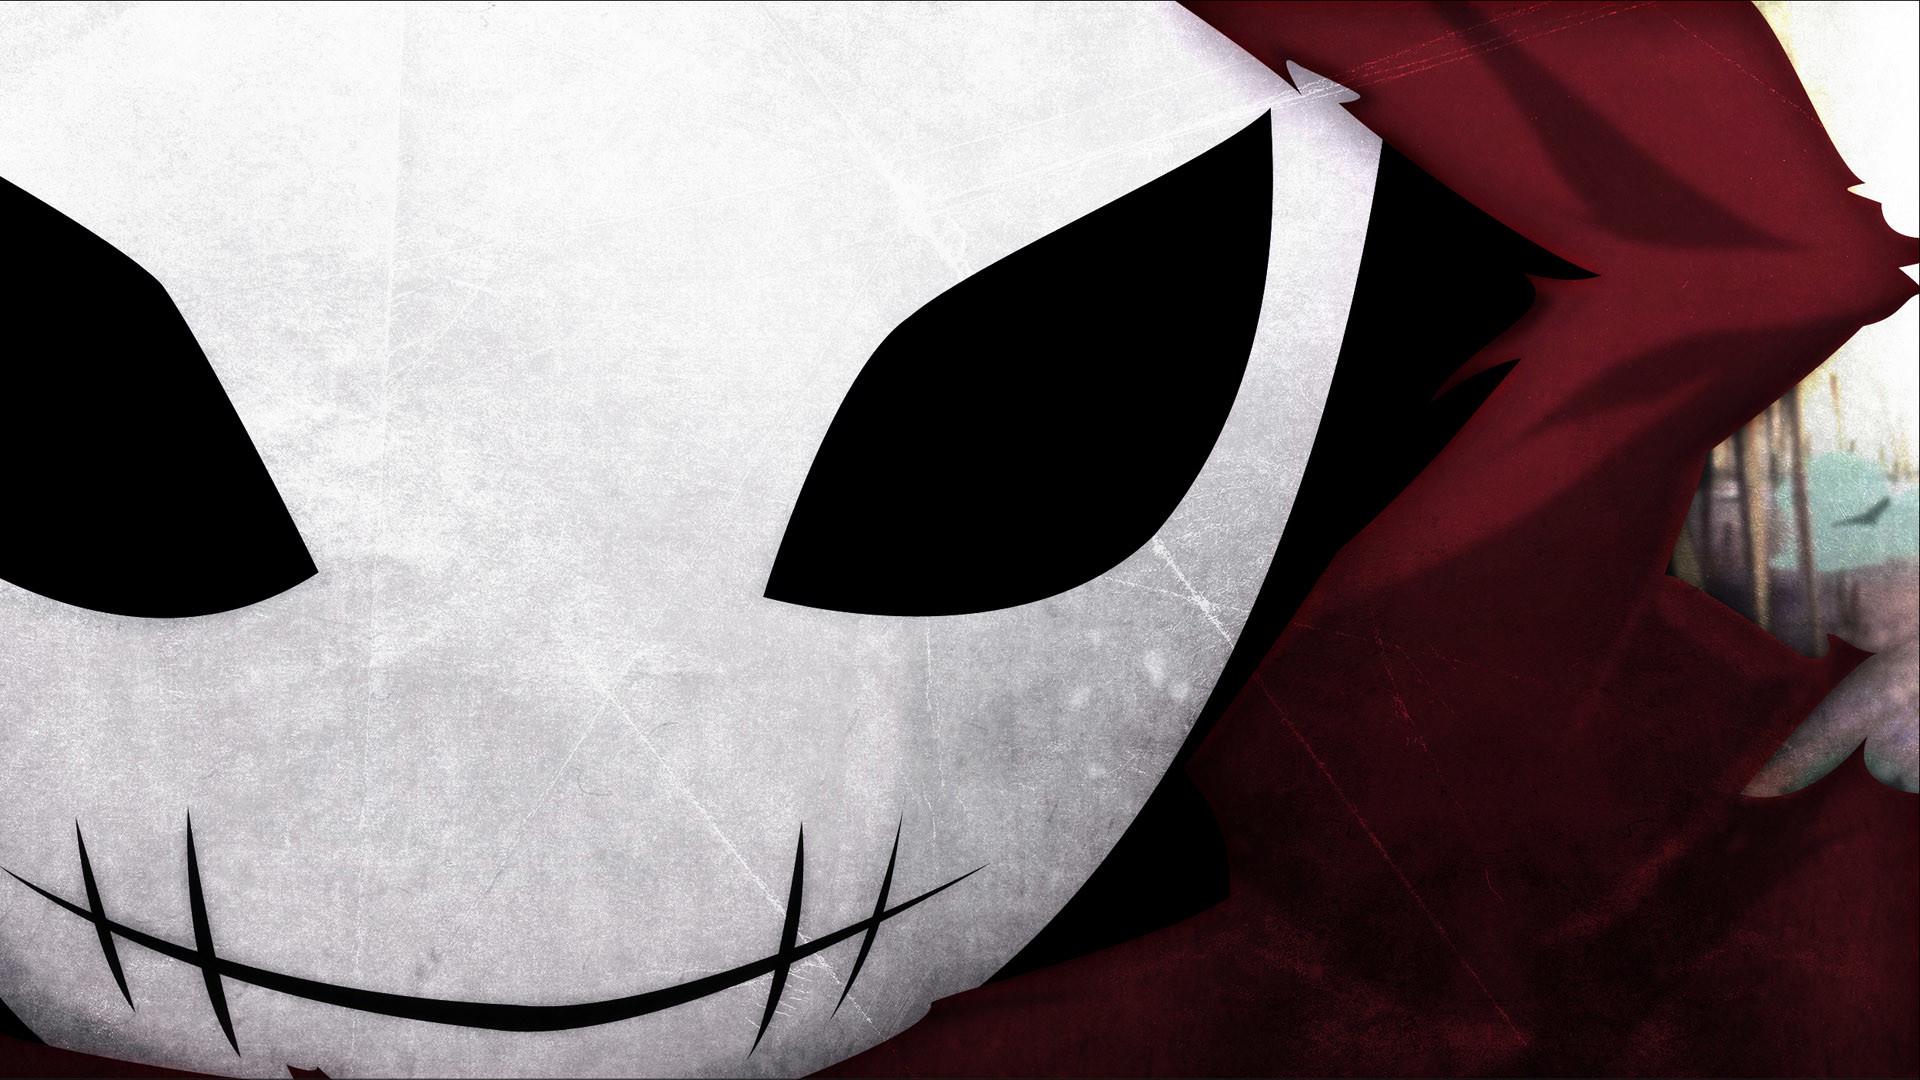 Top 10 horror anime series to watch this Halloween - Dexerto